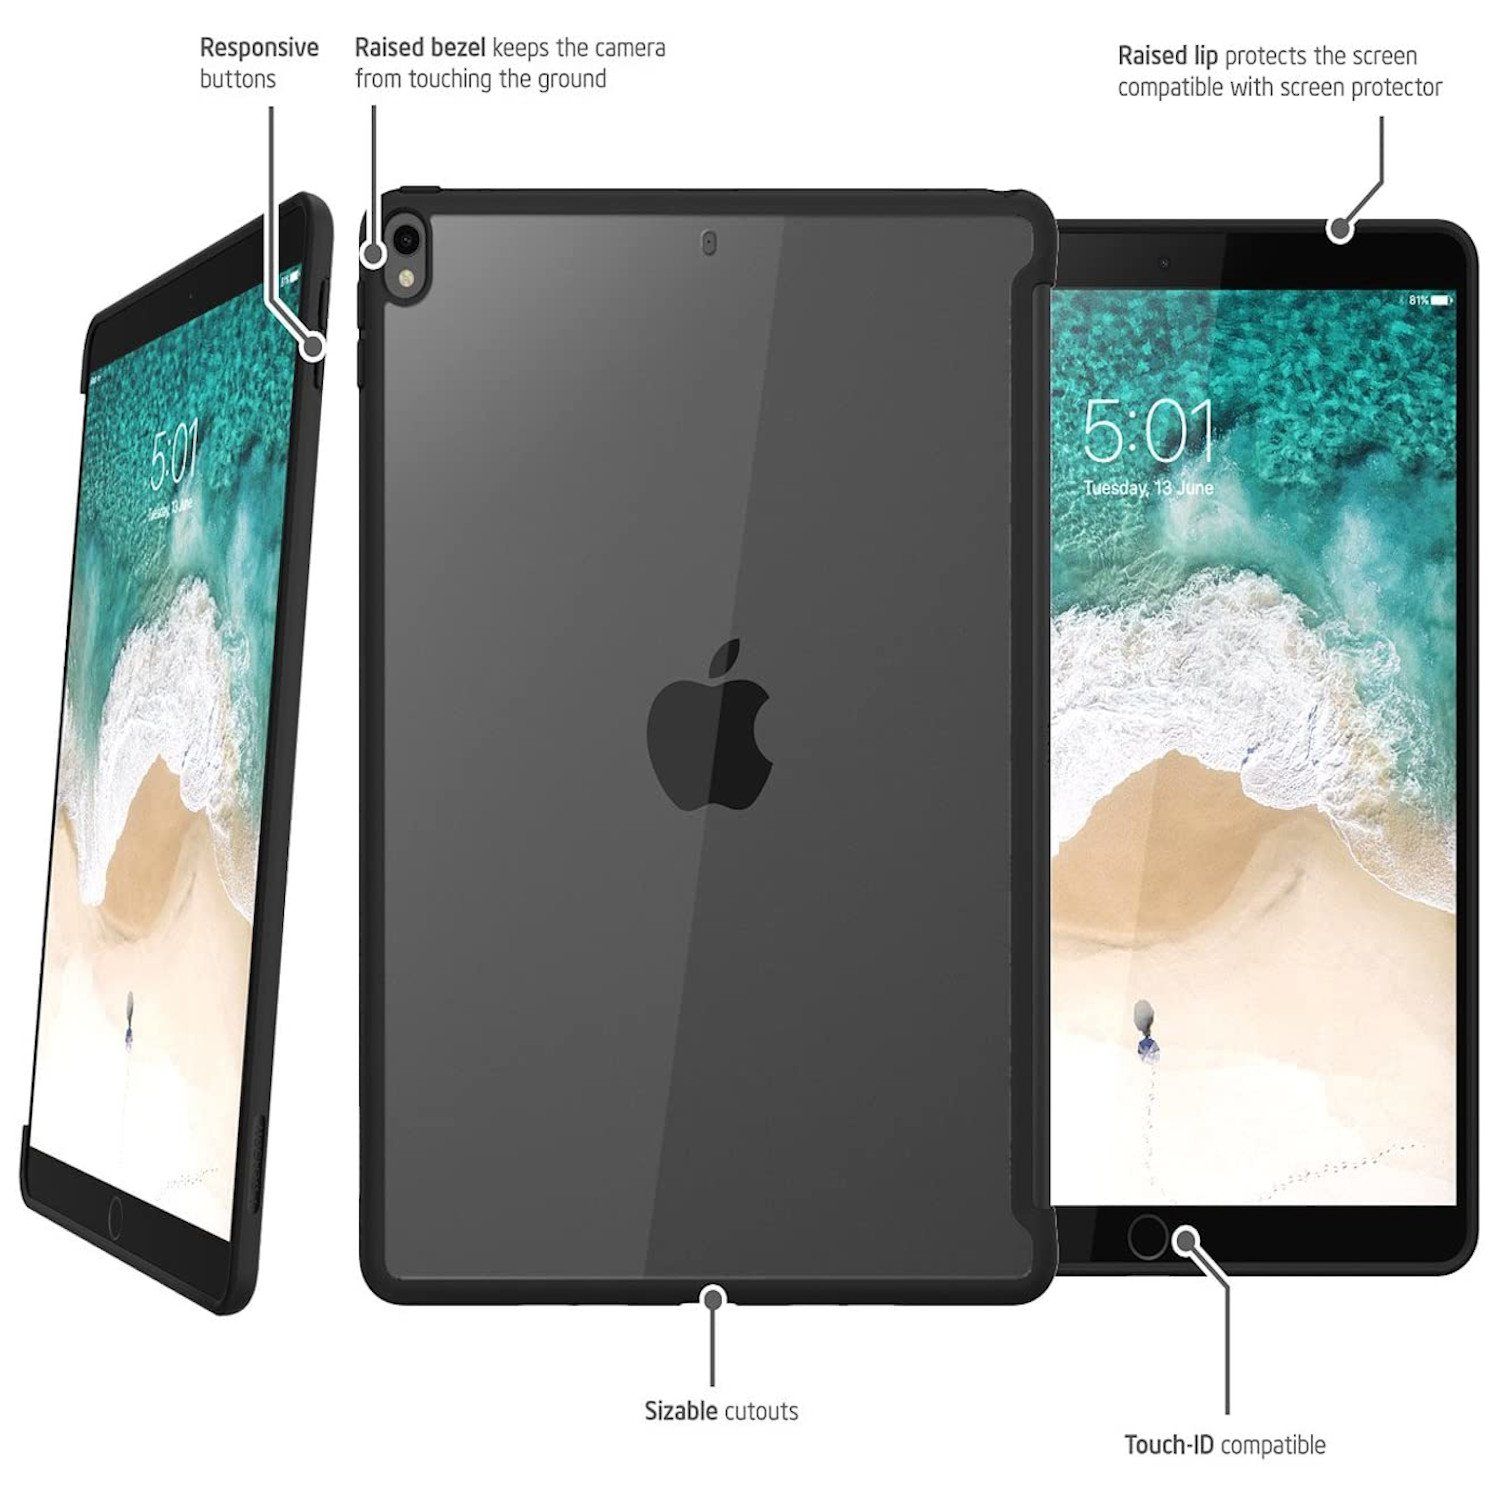 i-Blason Halo Series Clear Hybrid Keyboard Compatible Protective Case for iPad Pro(2017)/iPad Air 3(2019) 10.5", Black iPad Case i-Blason 